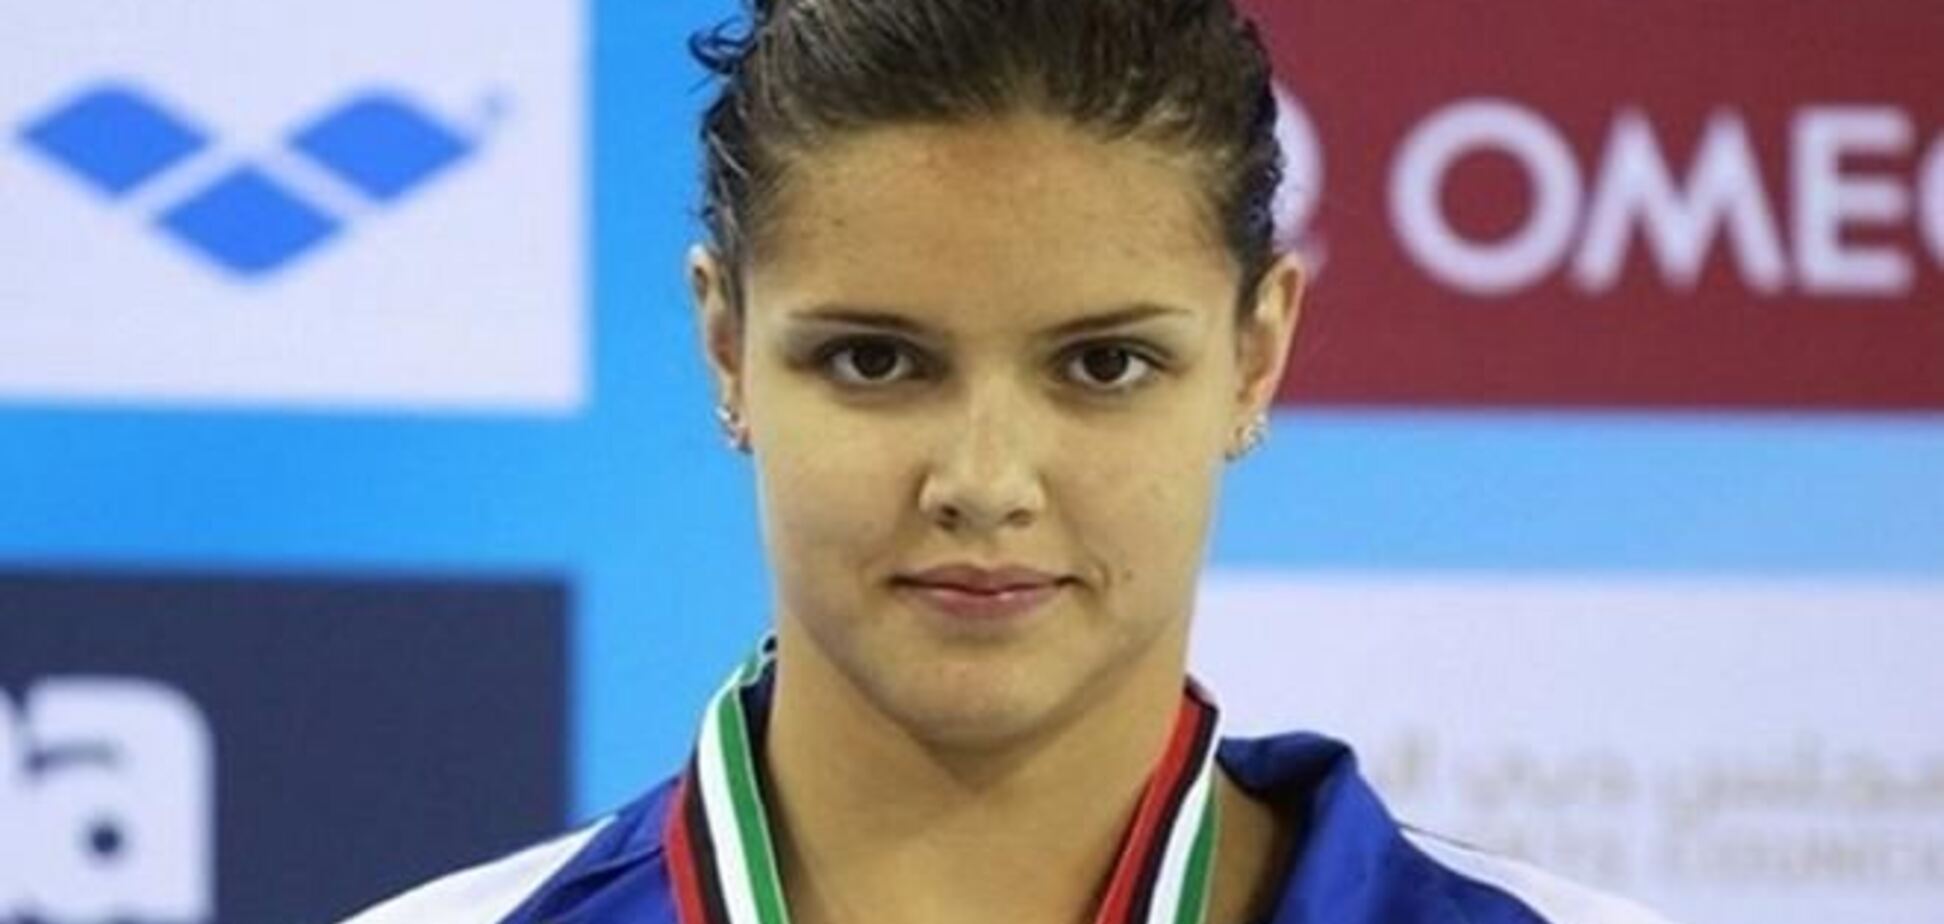 Пловчиха Зевина завоевала золото на пятом этапе Кубка мира